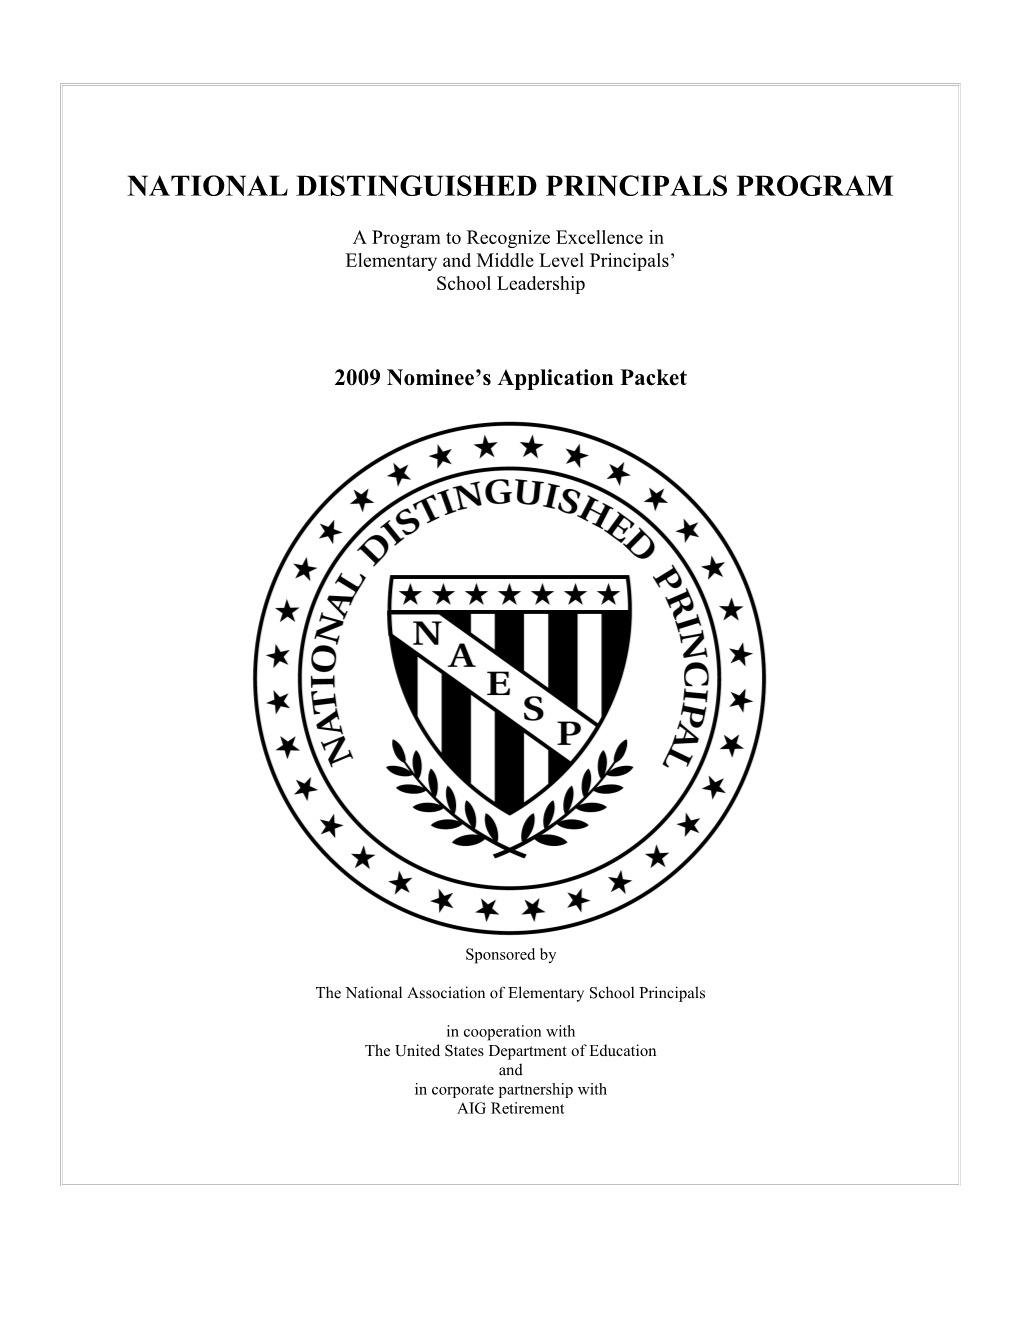 National Distinguished Principals Program